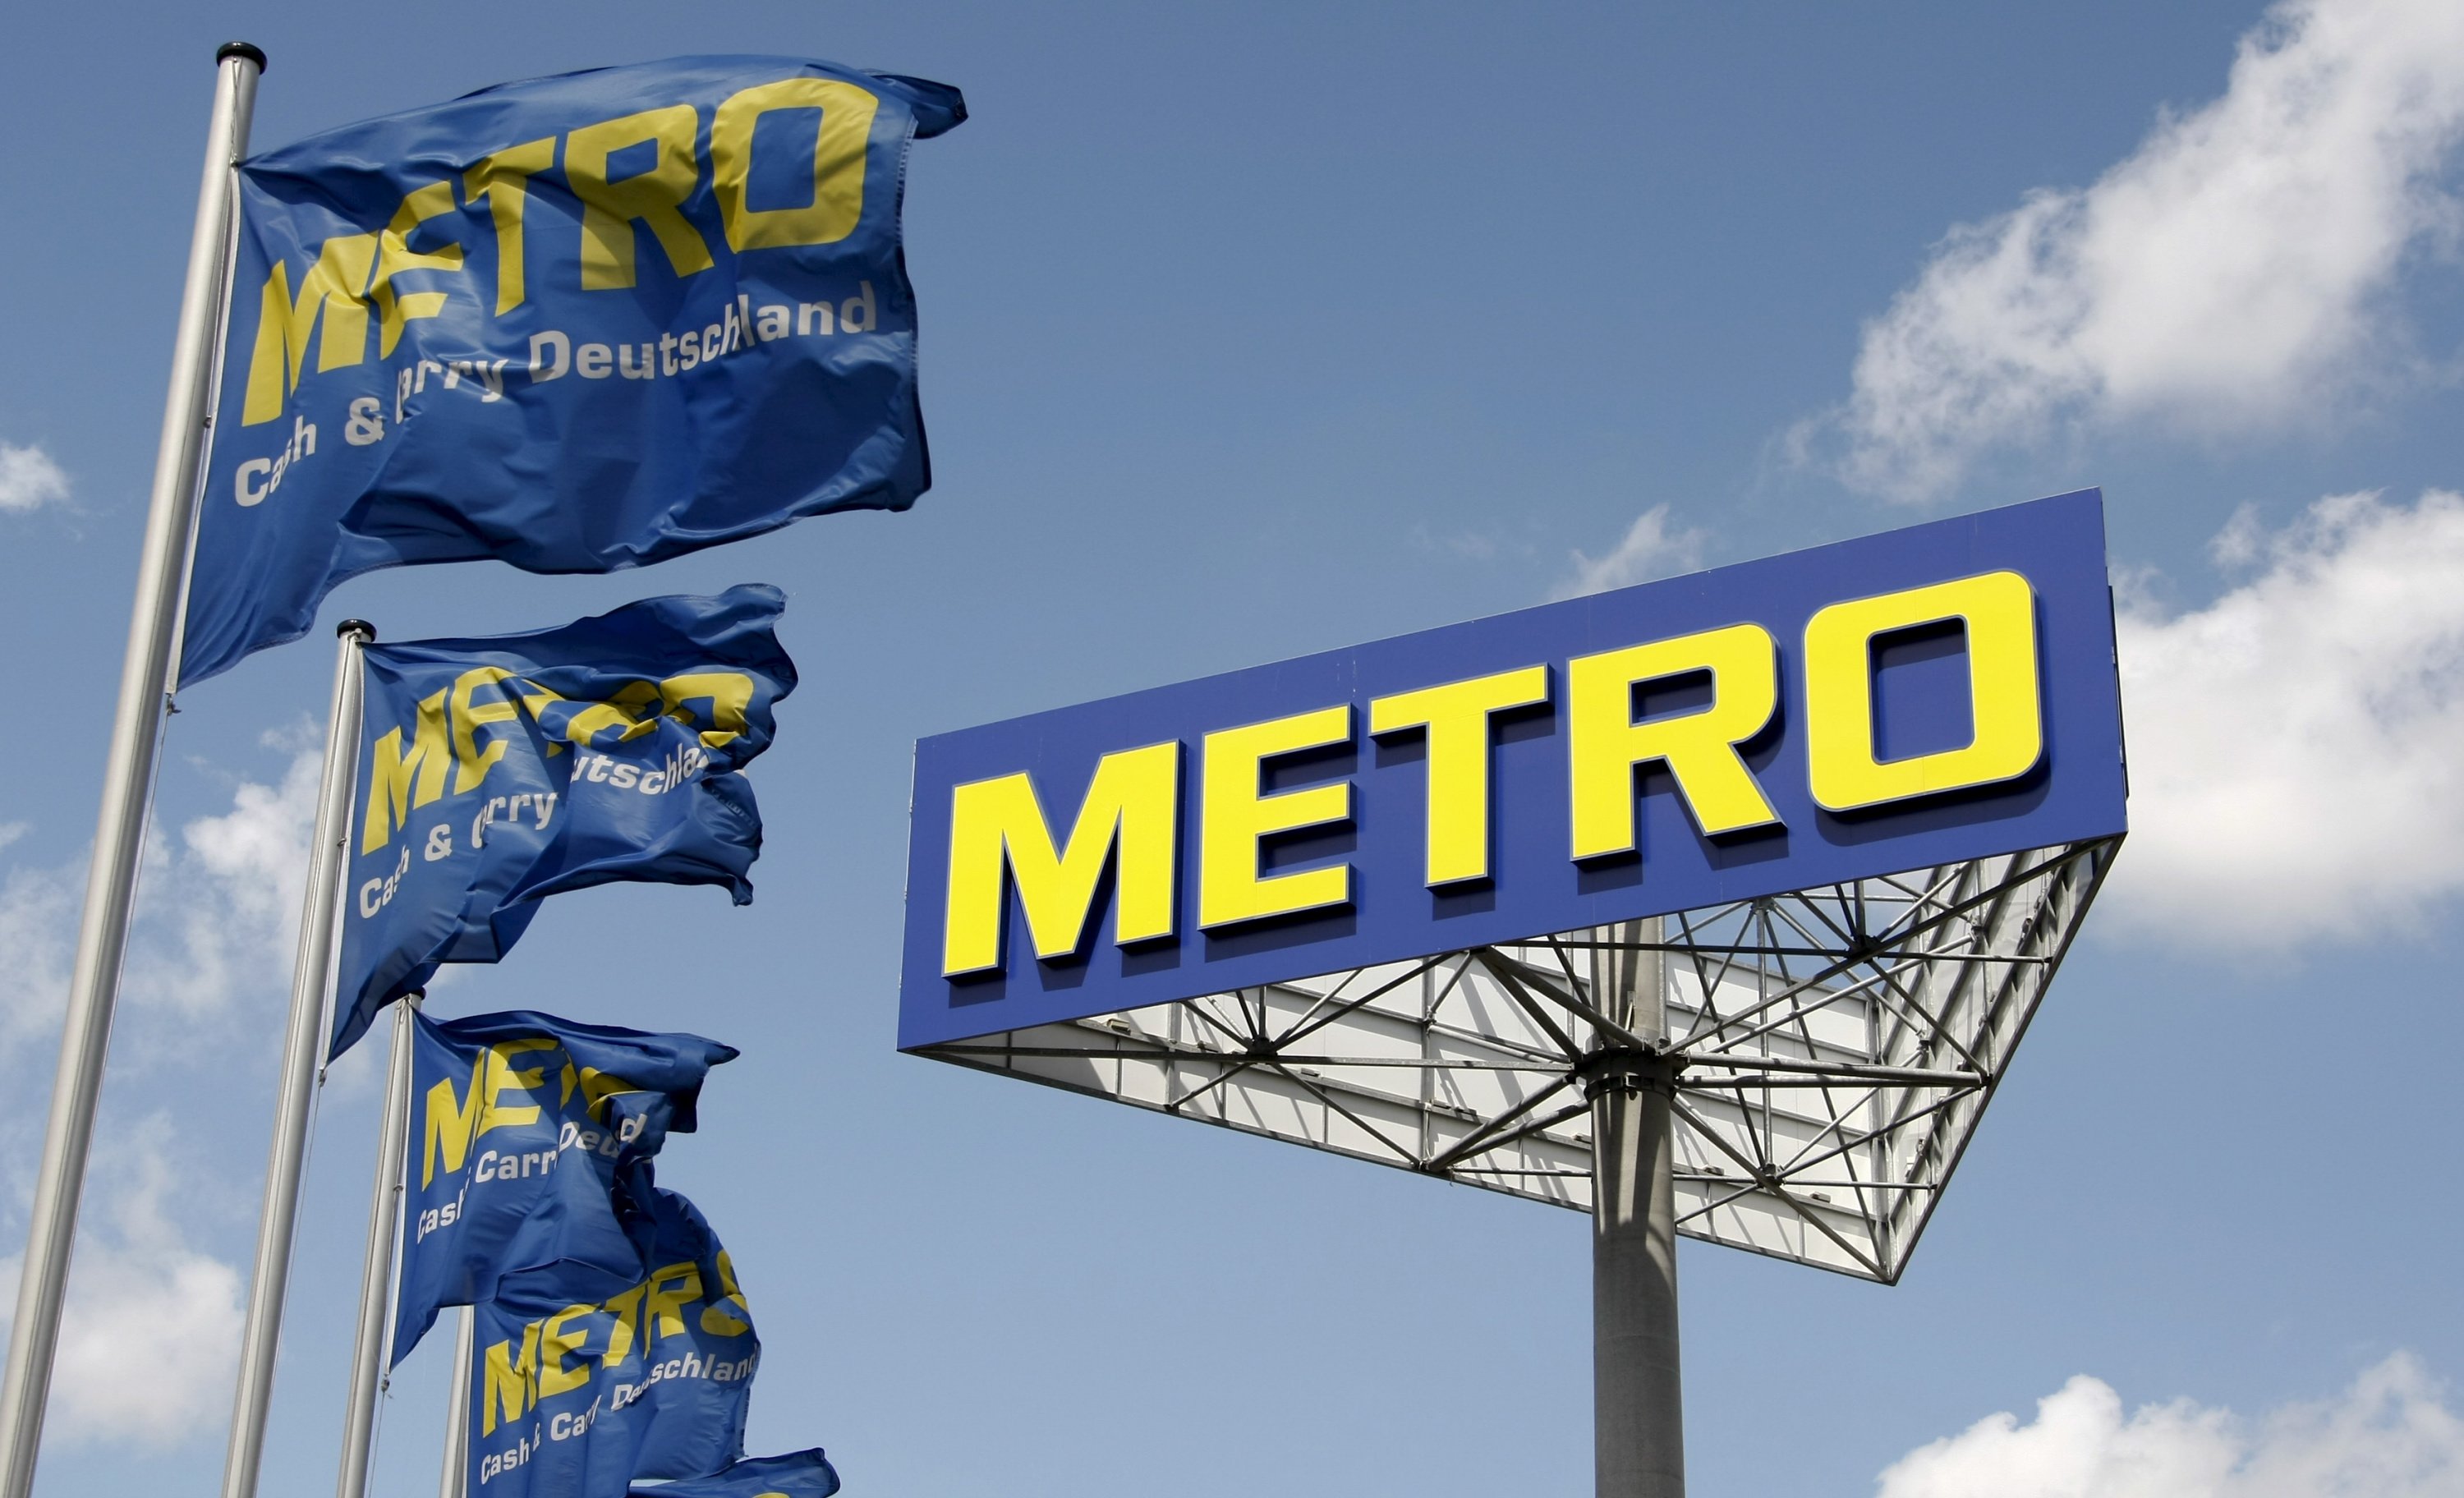 Metro shop